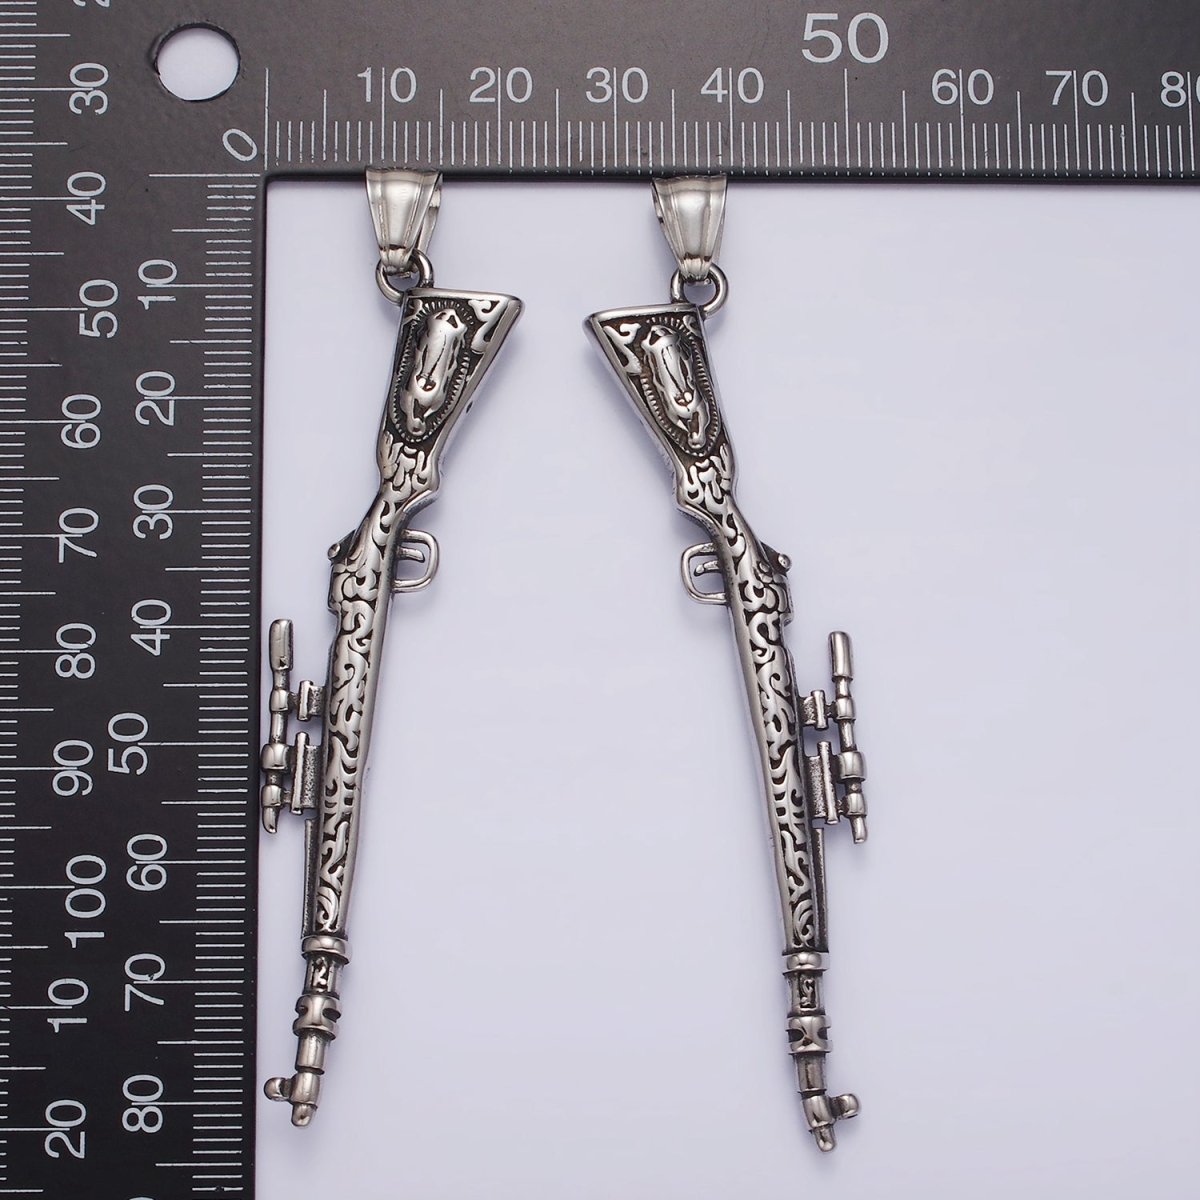 Stainless Steel Sniper Gun Charm Textured Men Jewelry Pendant | P1187 - DLUXCA